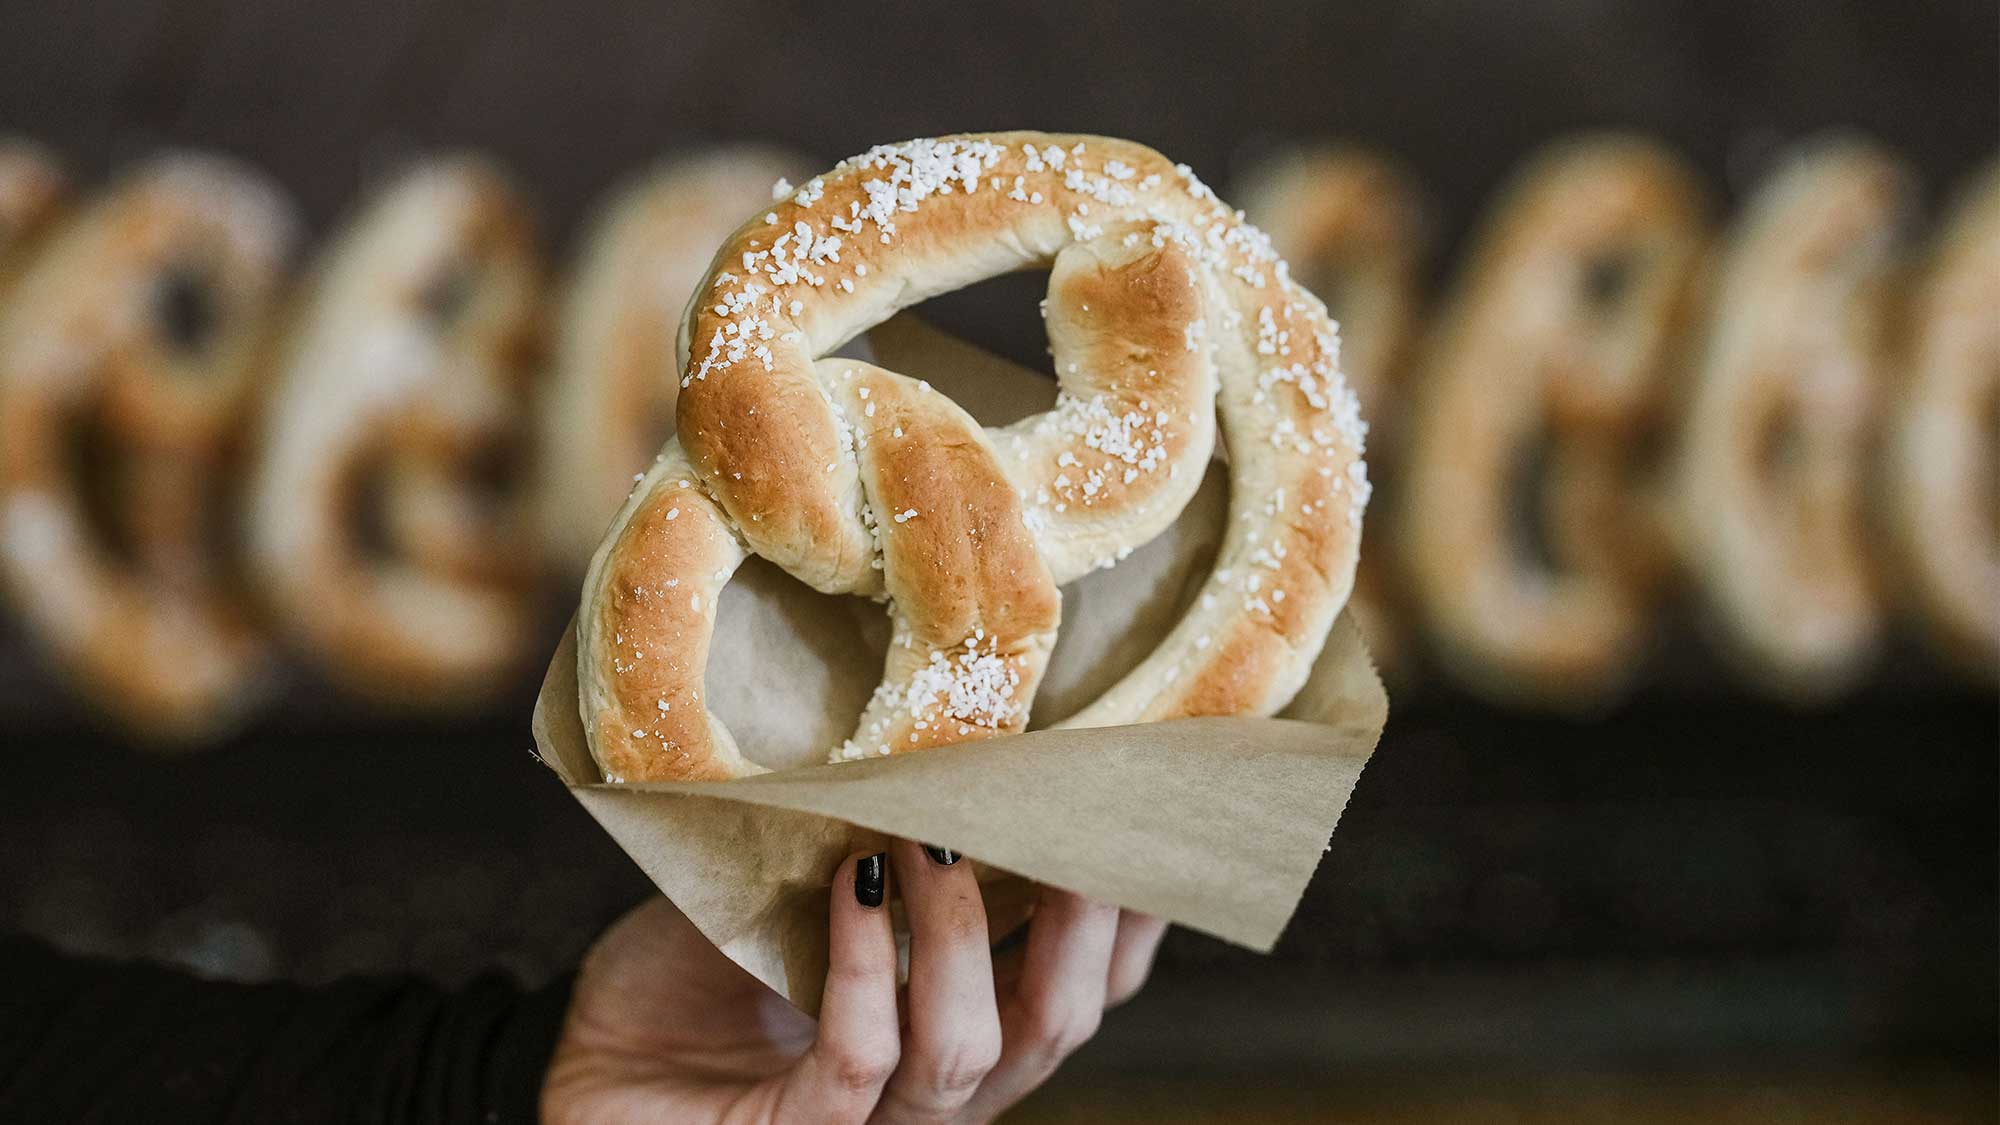 soft pretzel offered at a baseball stadium